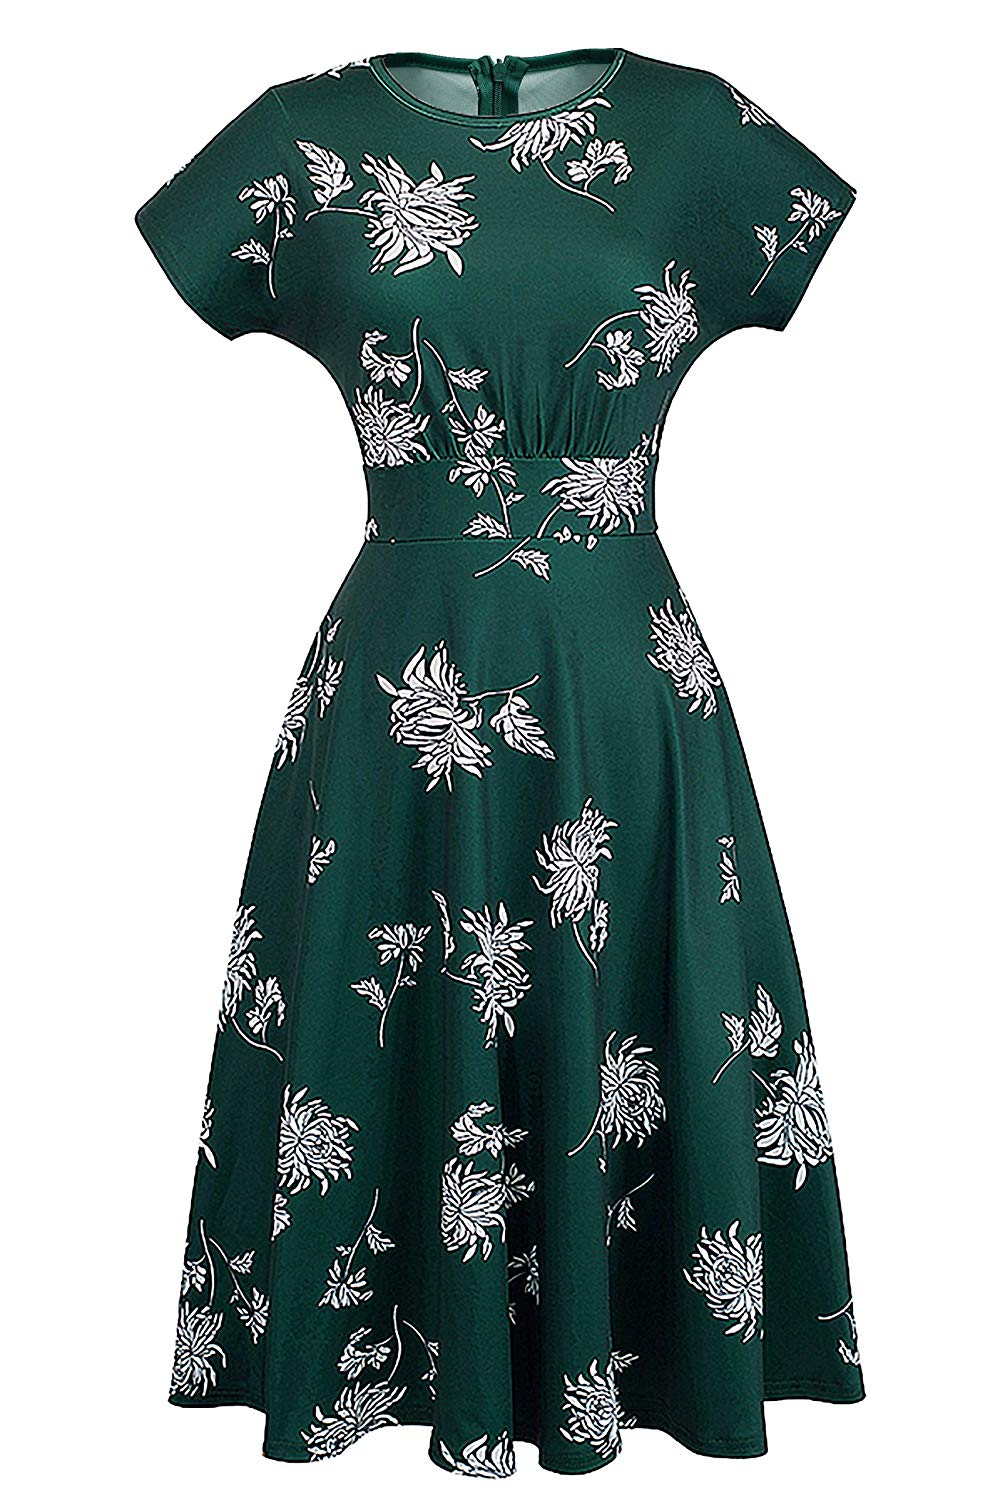 HOMEYEE Women's Short Sleeve Floral Casual Aline Midi Dress, A-green ...